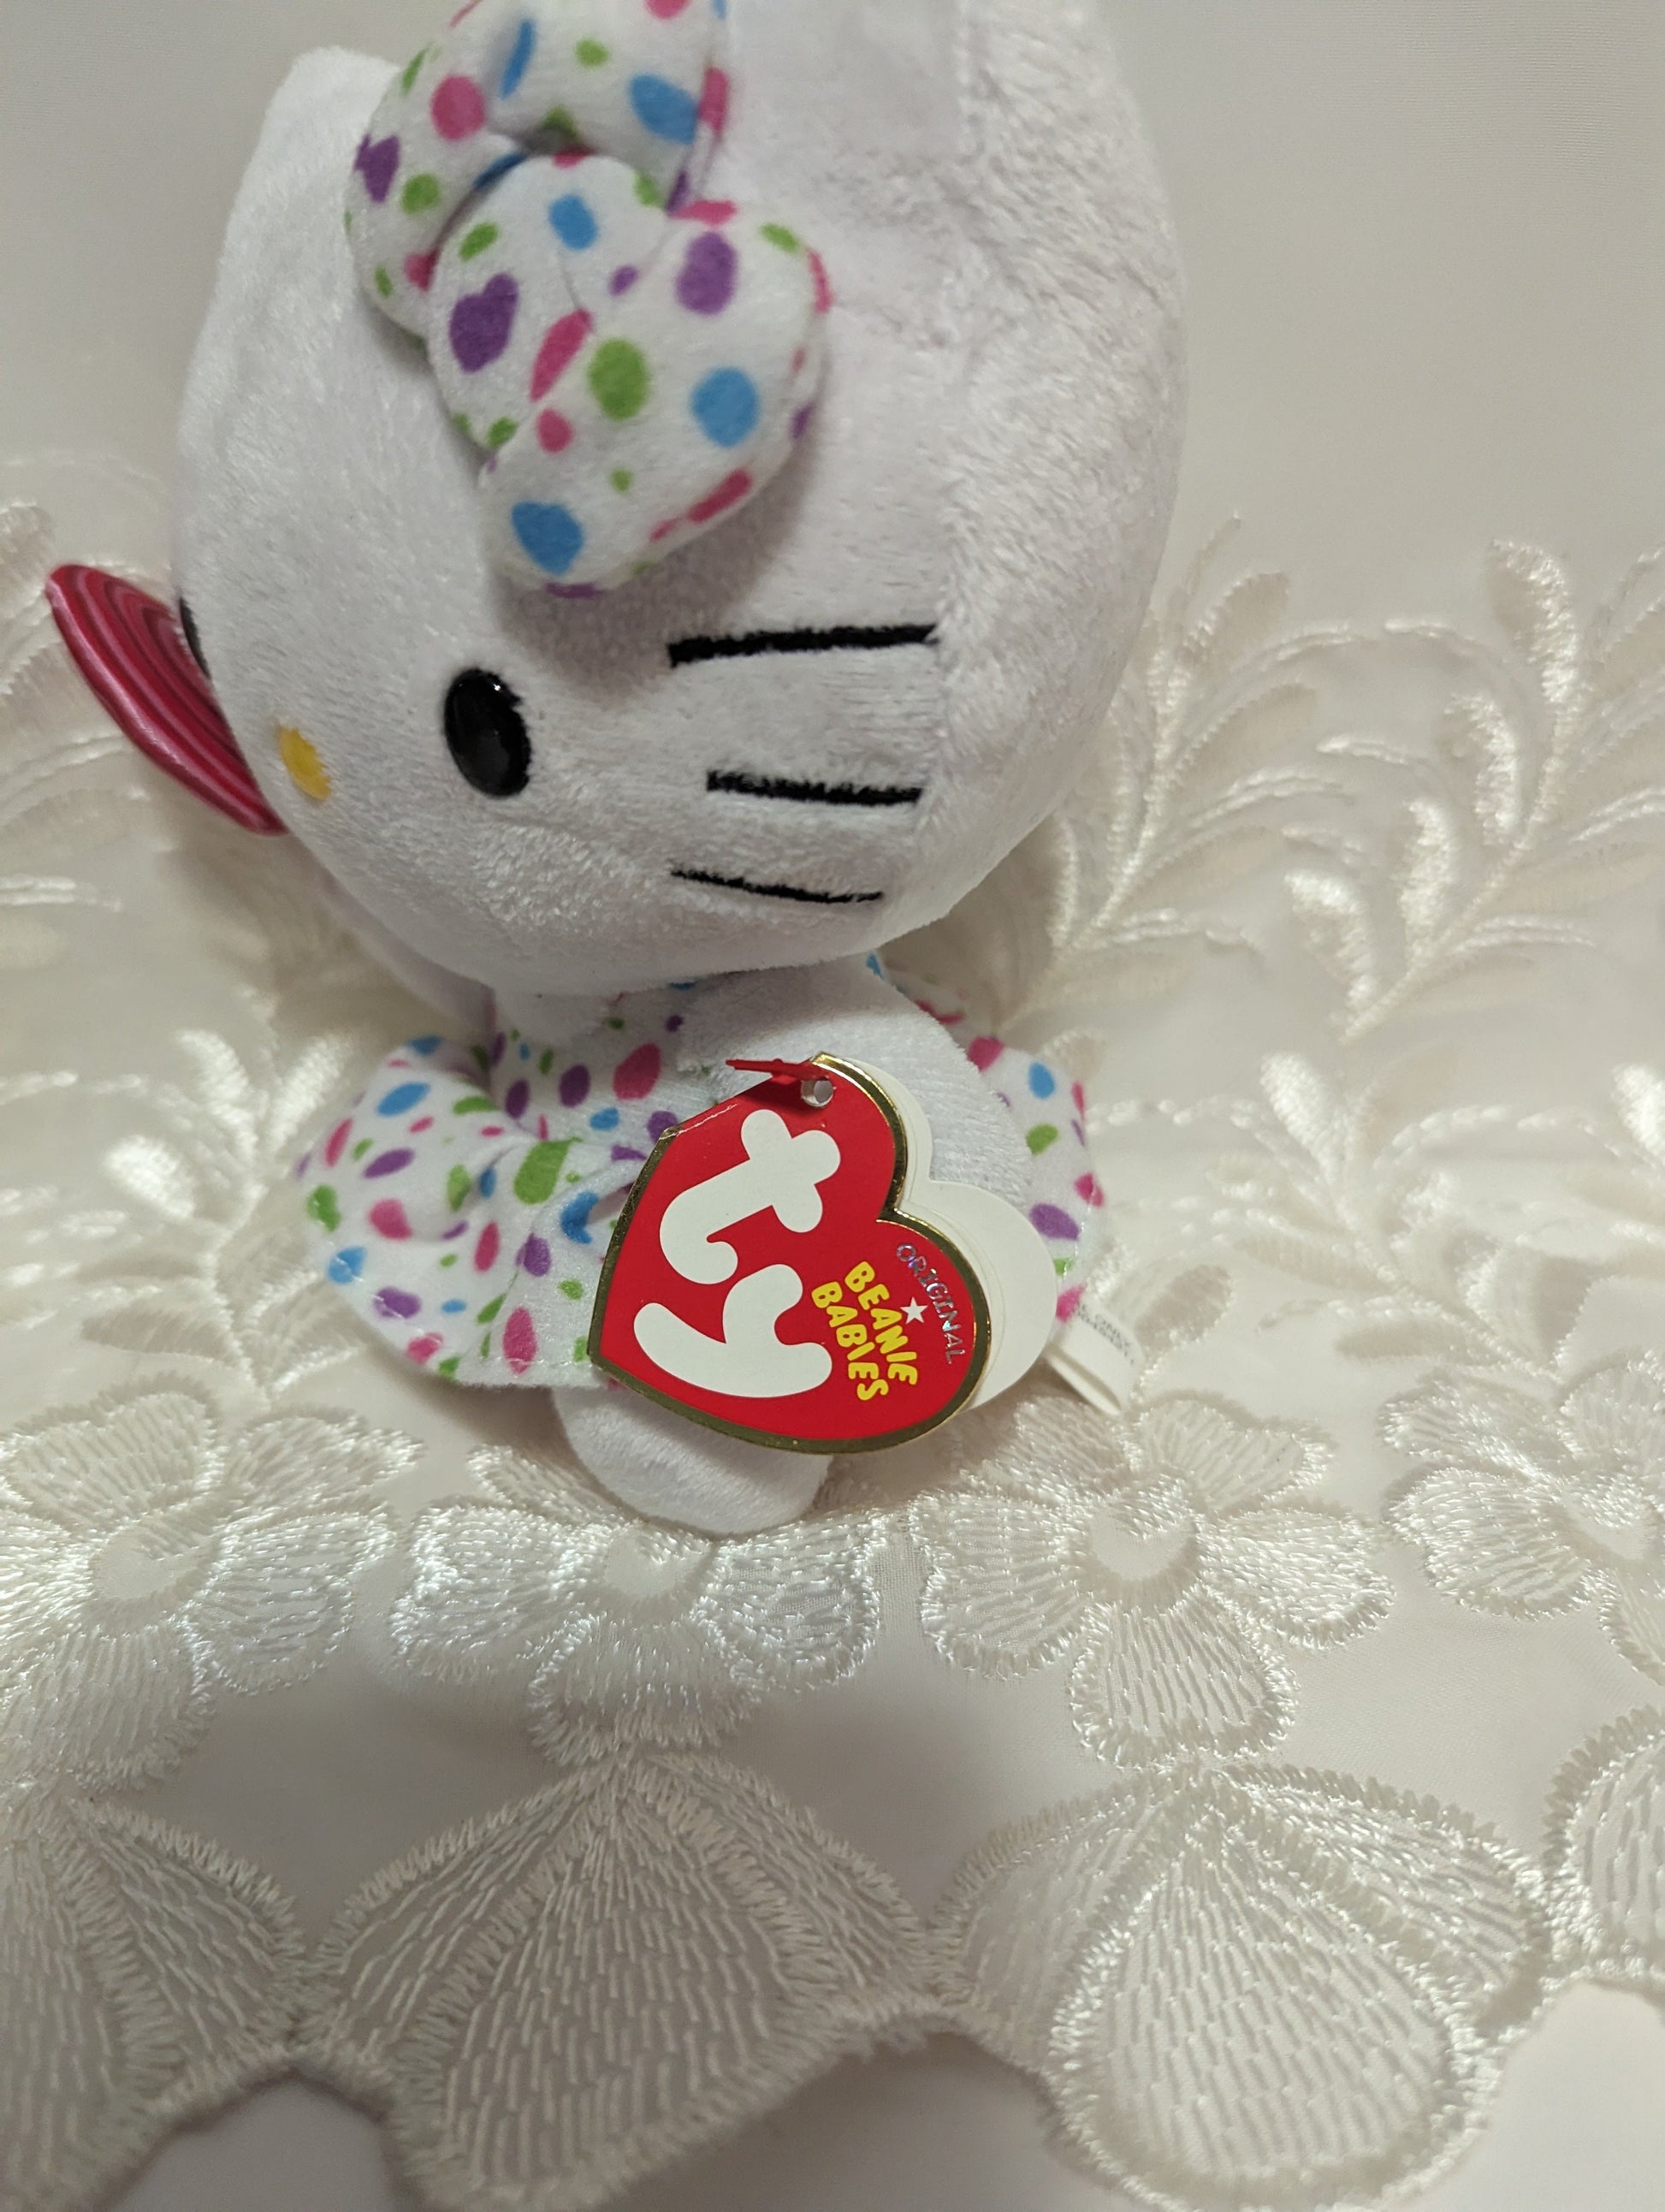 TY Beanie Baby - Hello Kitty In Polkadot Dress Holding Lollipop (6in) - Vintage Beanies Canada